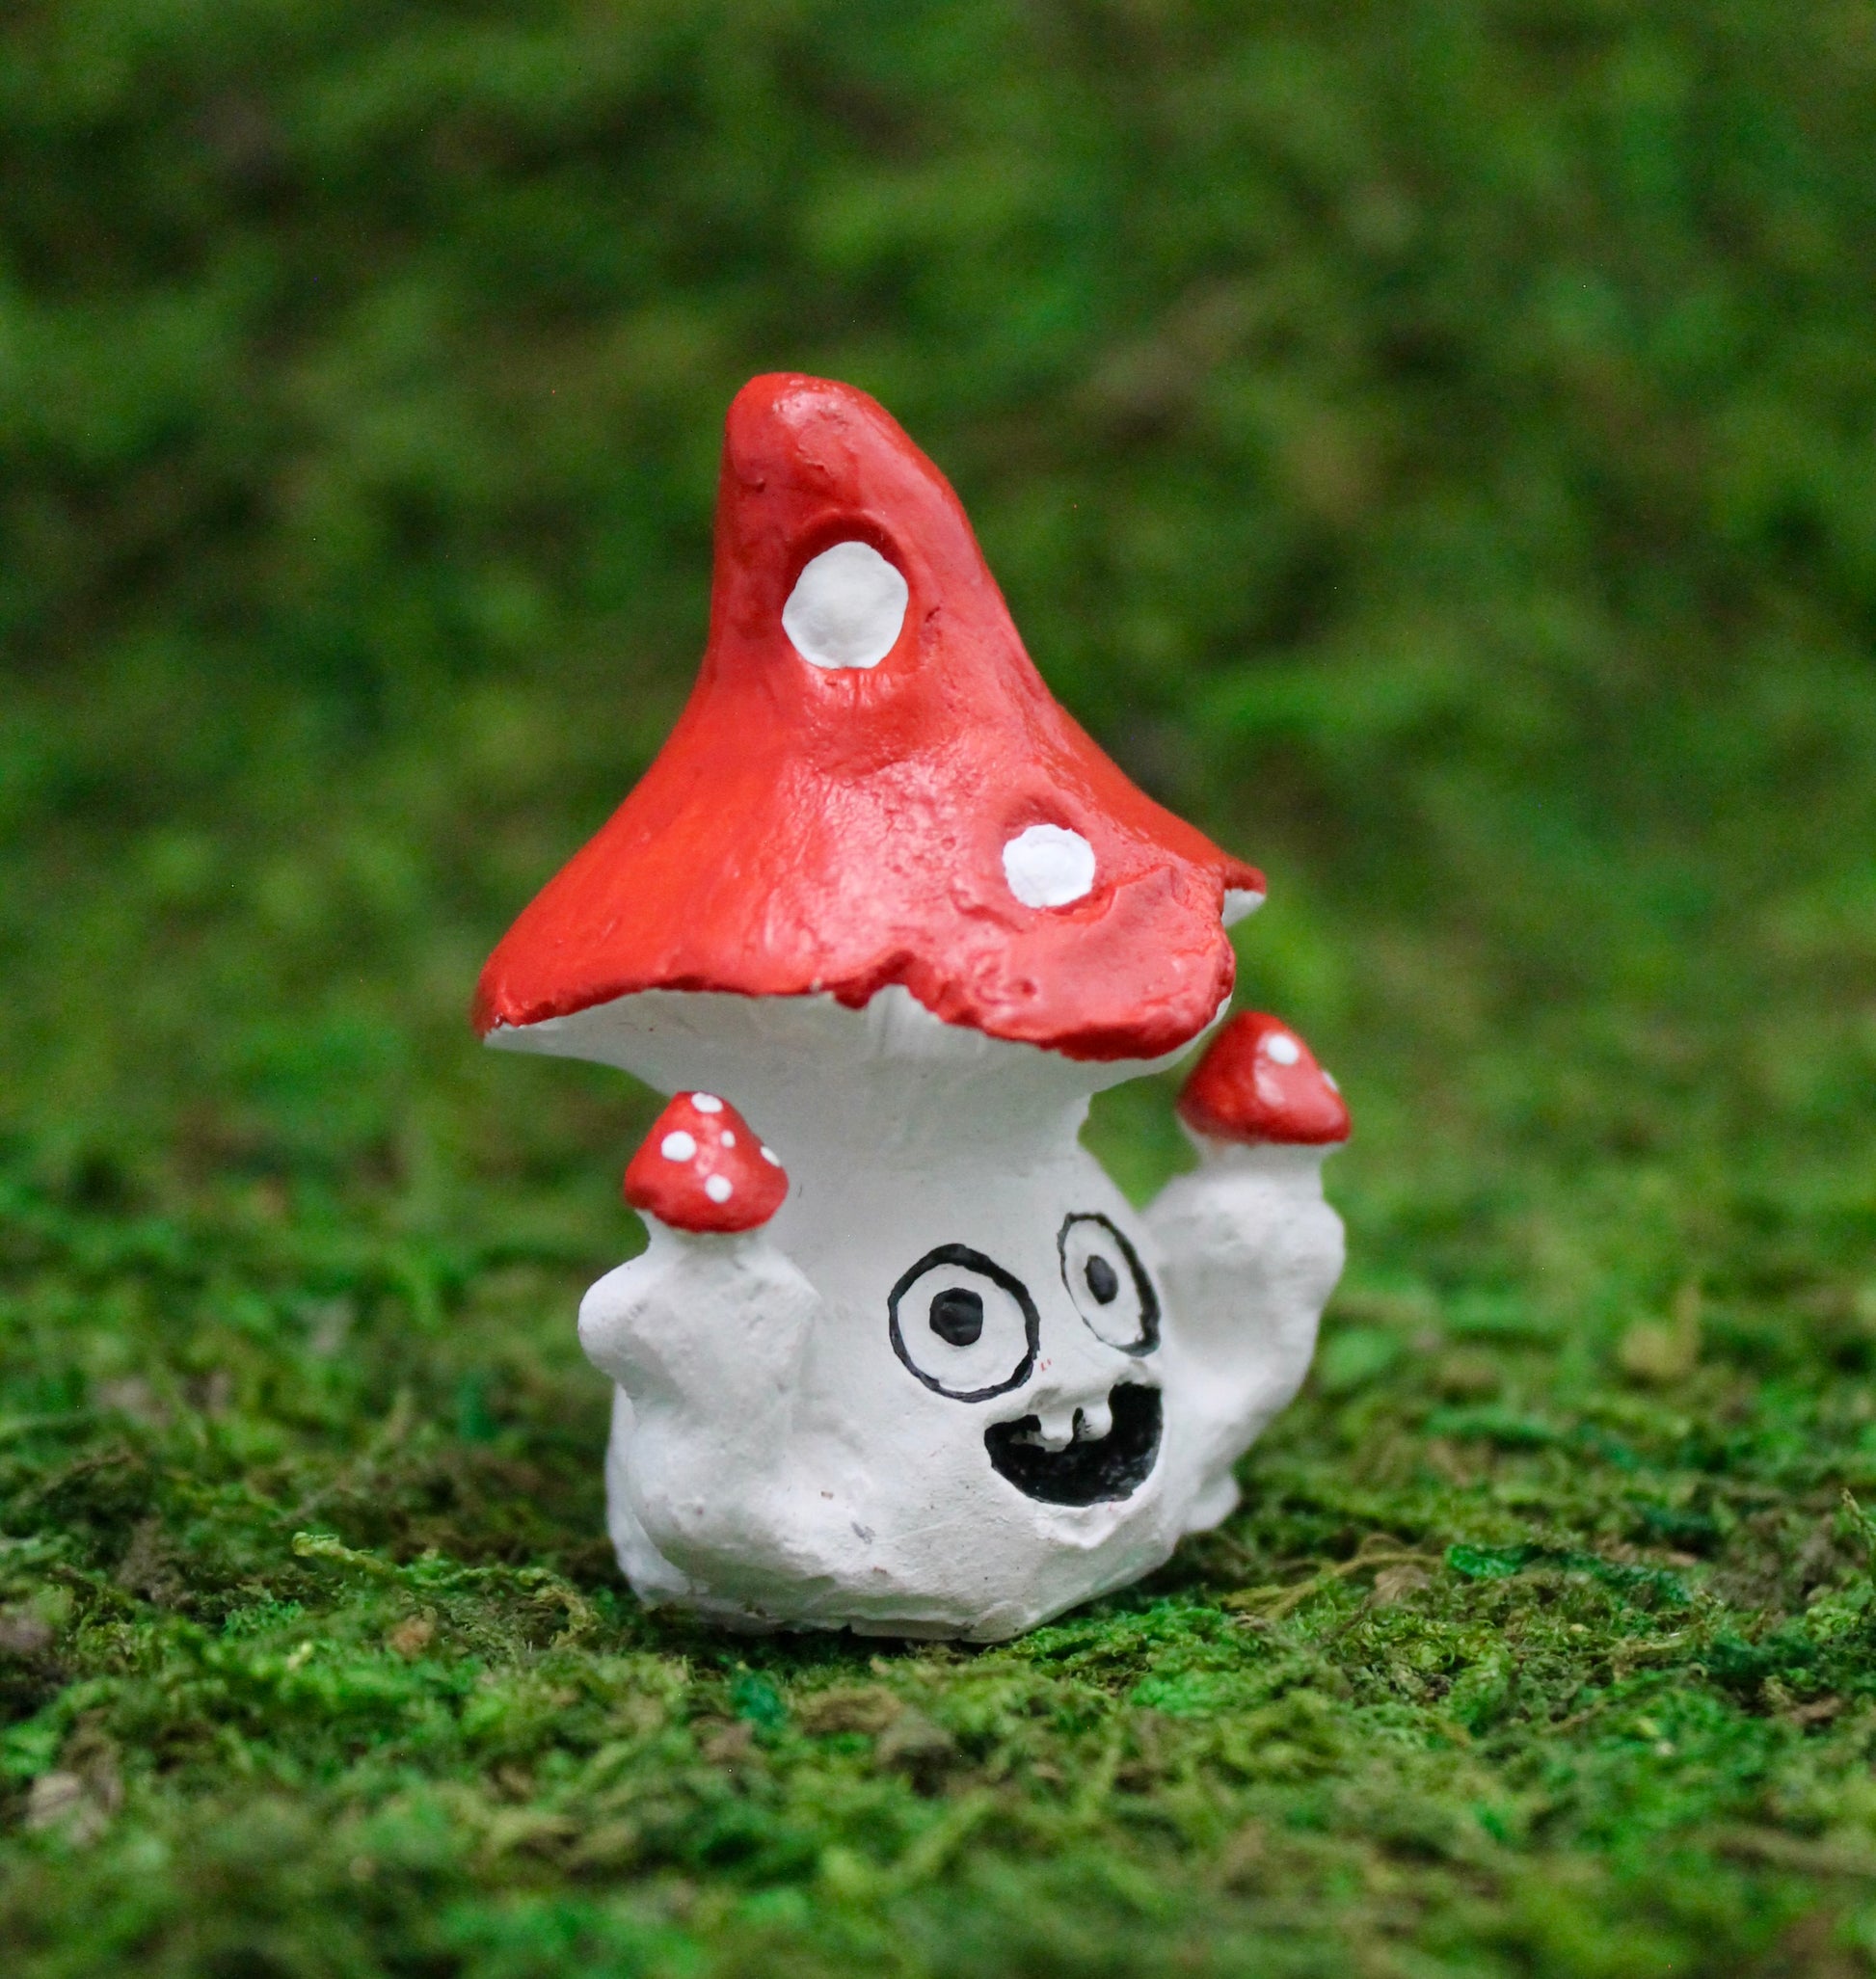 Just Some Fun Guys: Mushroom Bookmarks, Notebooks, and More Fungi Goods